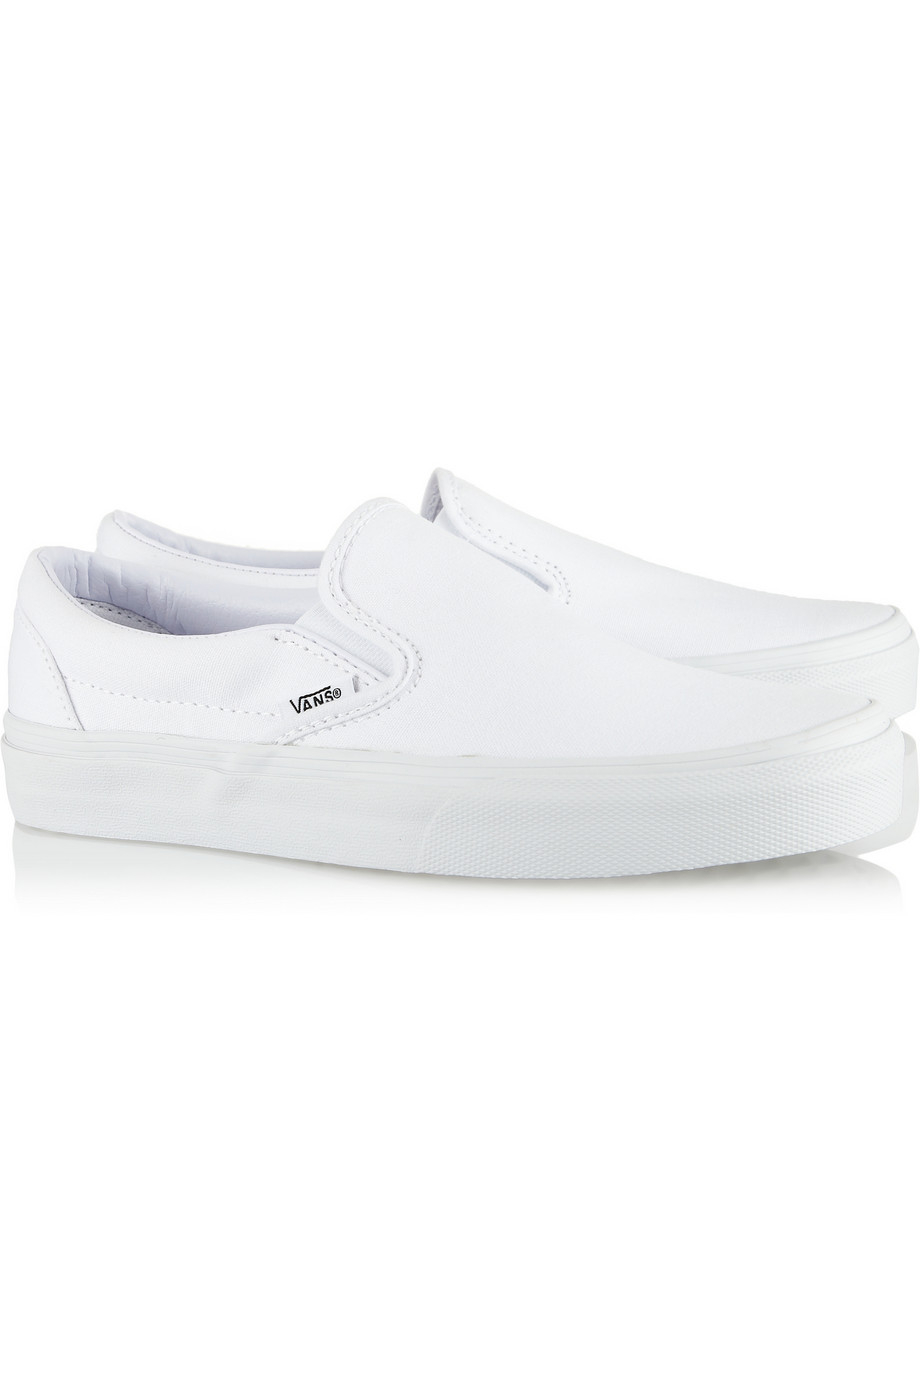 Lyst - Vans Canvas Slip-On Sneakers in White